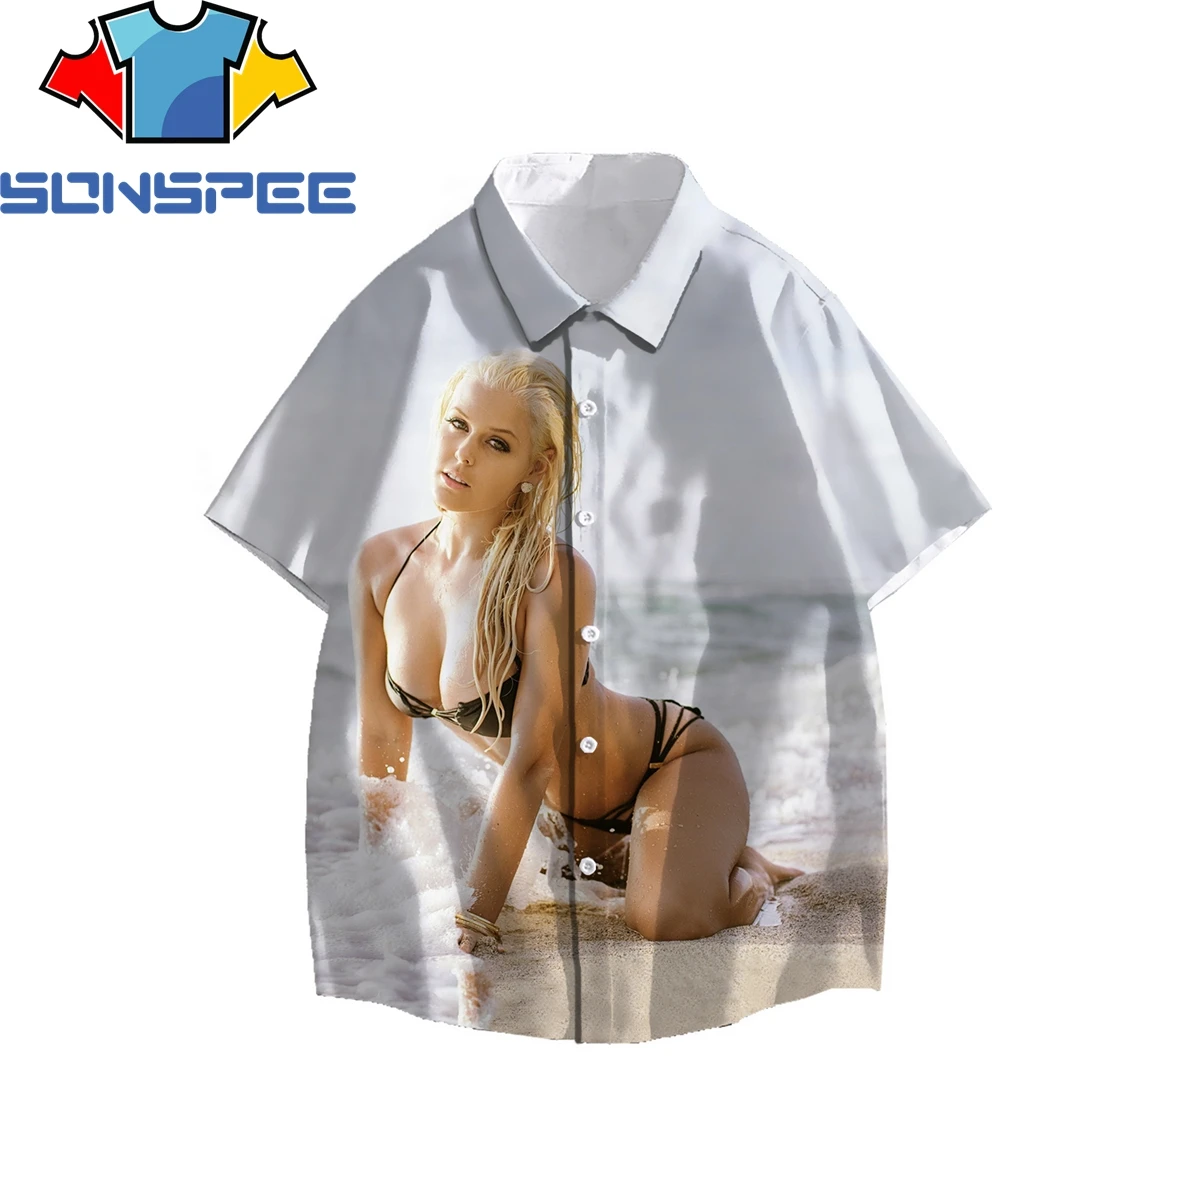 

SONSPEE Summer Beach Bikini Blond Model Print Vest 3D Men Women Tank Top Fashion Passion Otaku Sleeveless Tank Tops Man Clothing